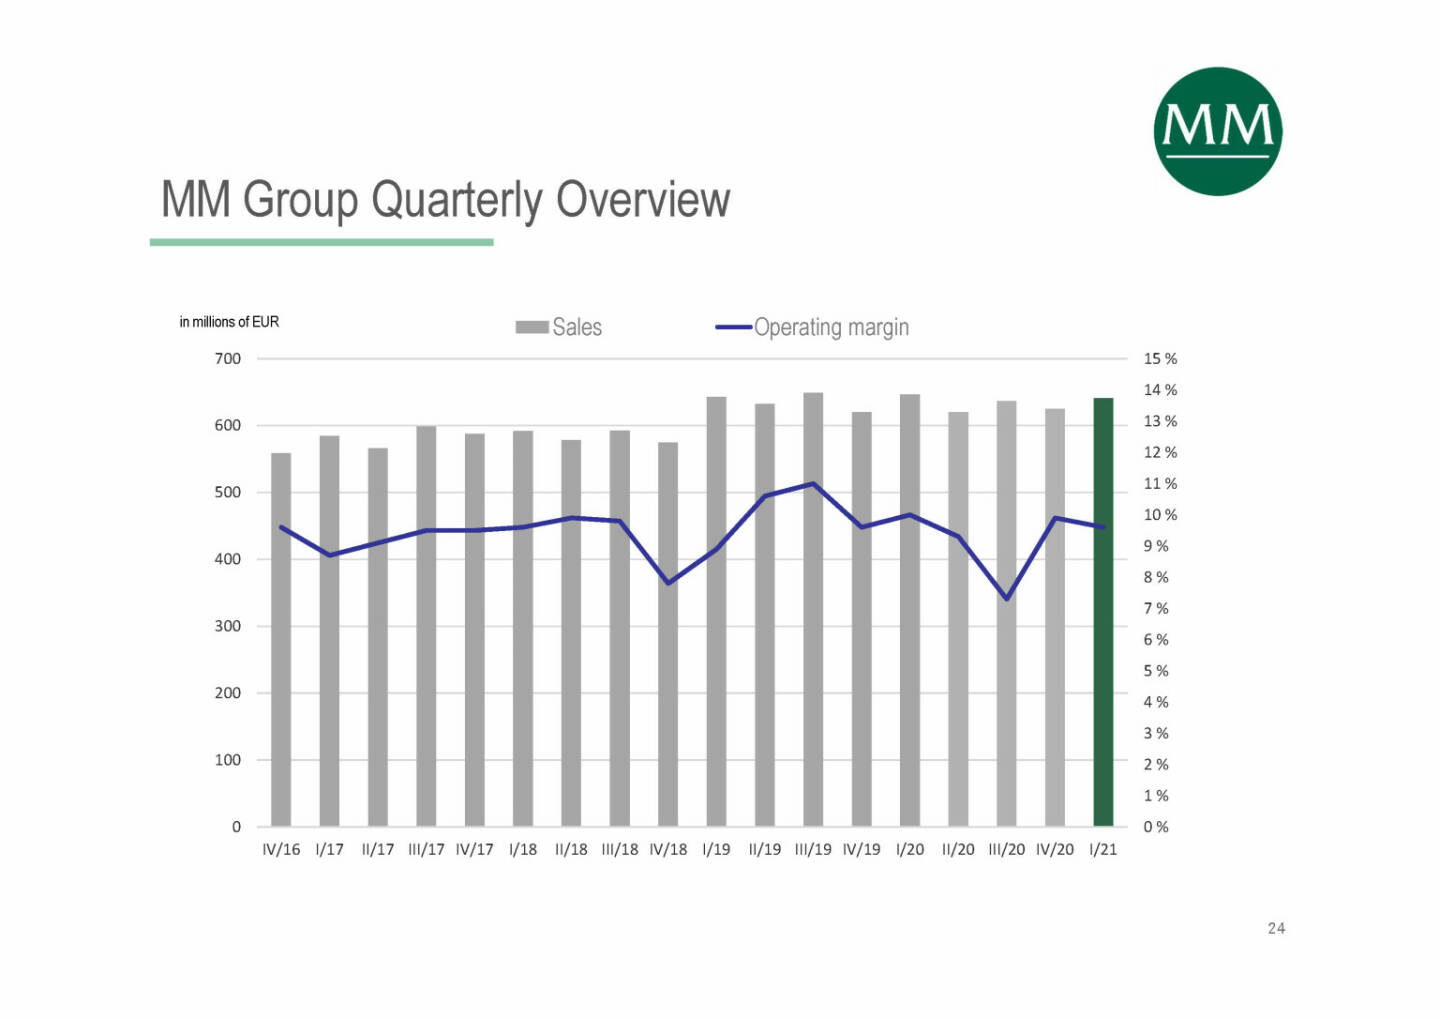 Mayr-Melnhof - MM Group Quarterly Overview